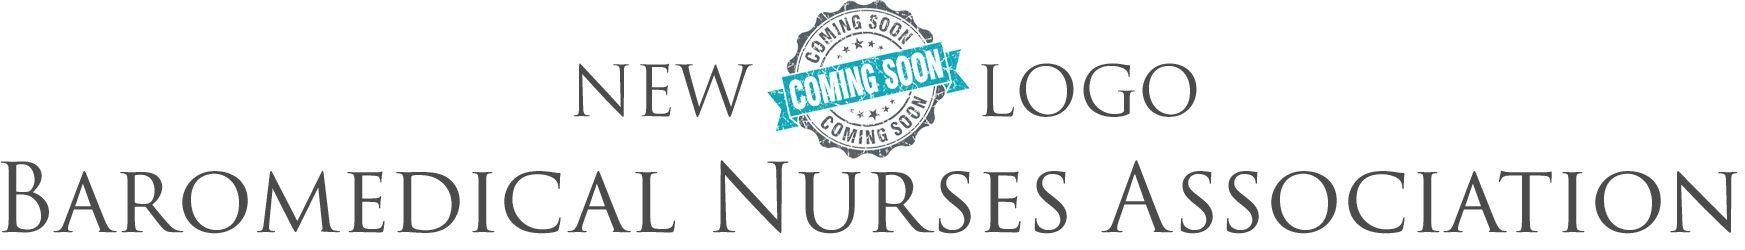 BNA Logo - Baromedical Nurses Association » The BNA is looking for a new logo!